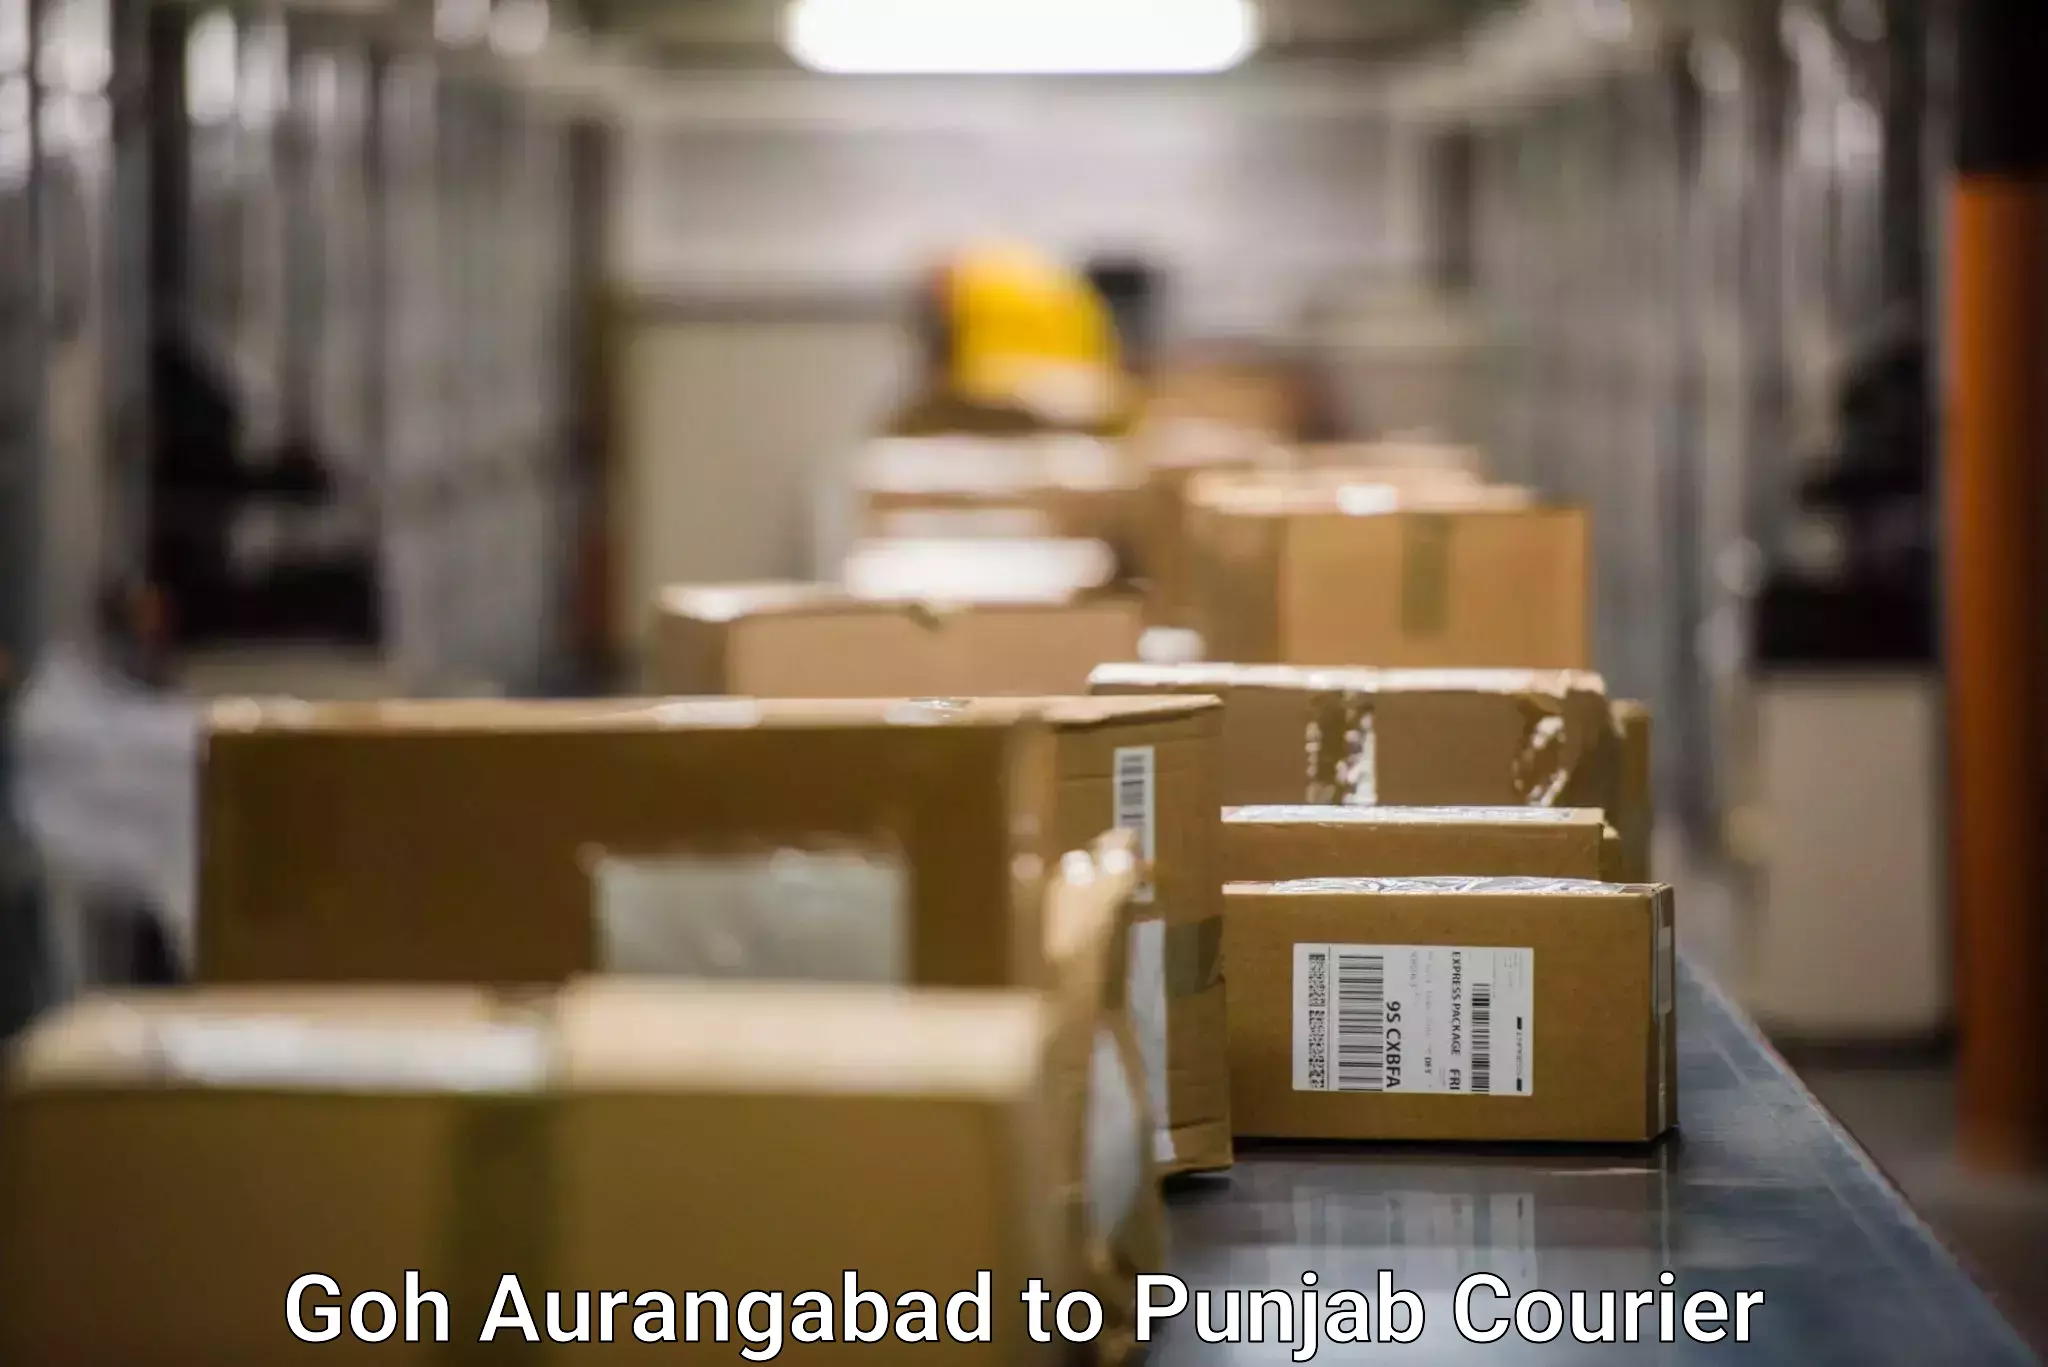 Global logistics network Goh Aurangabad to Ajnala